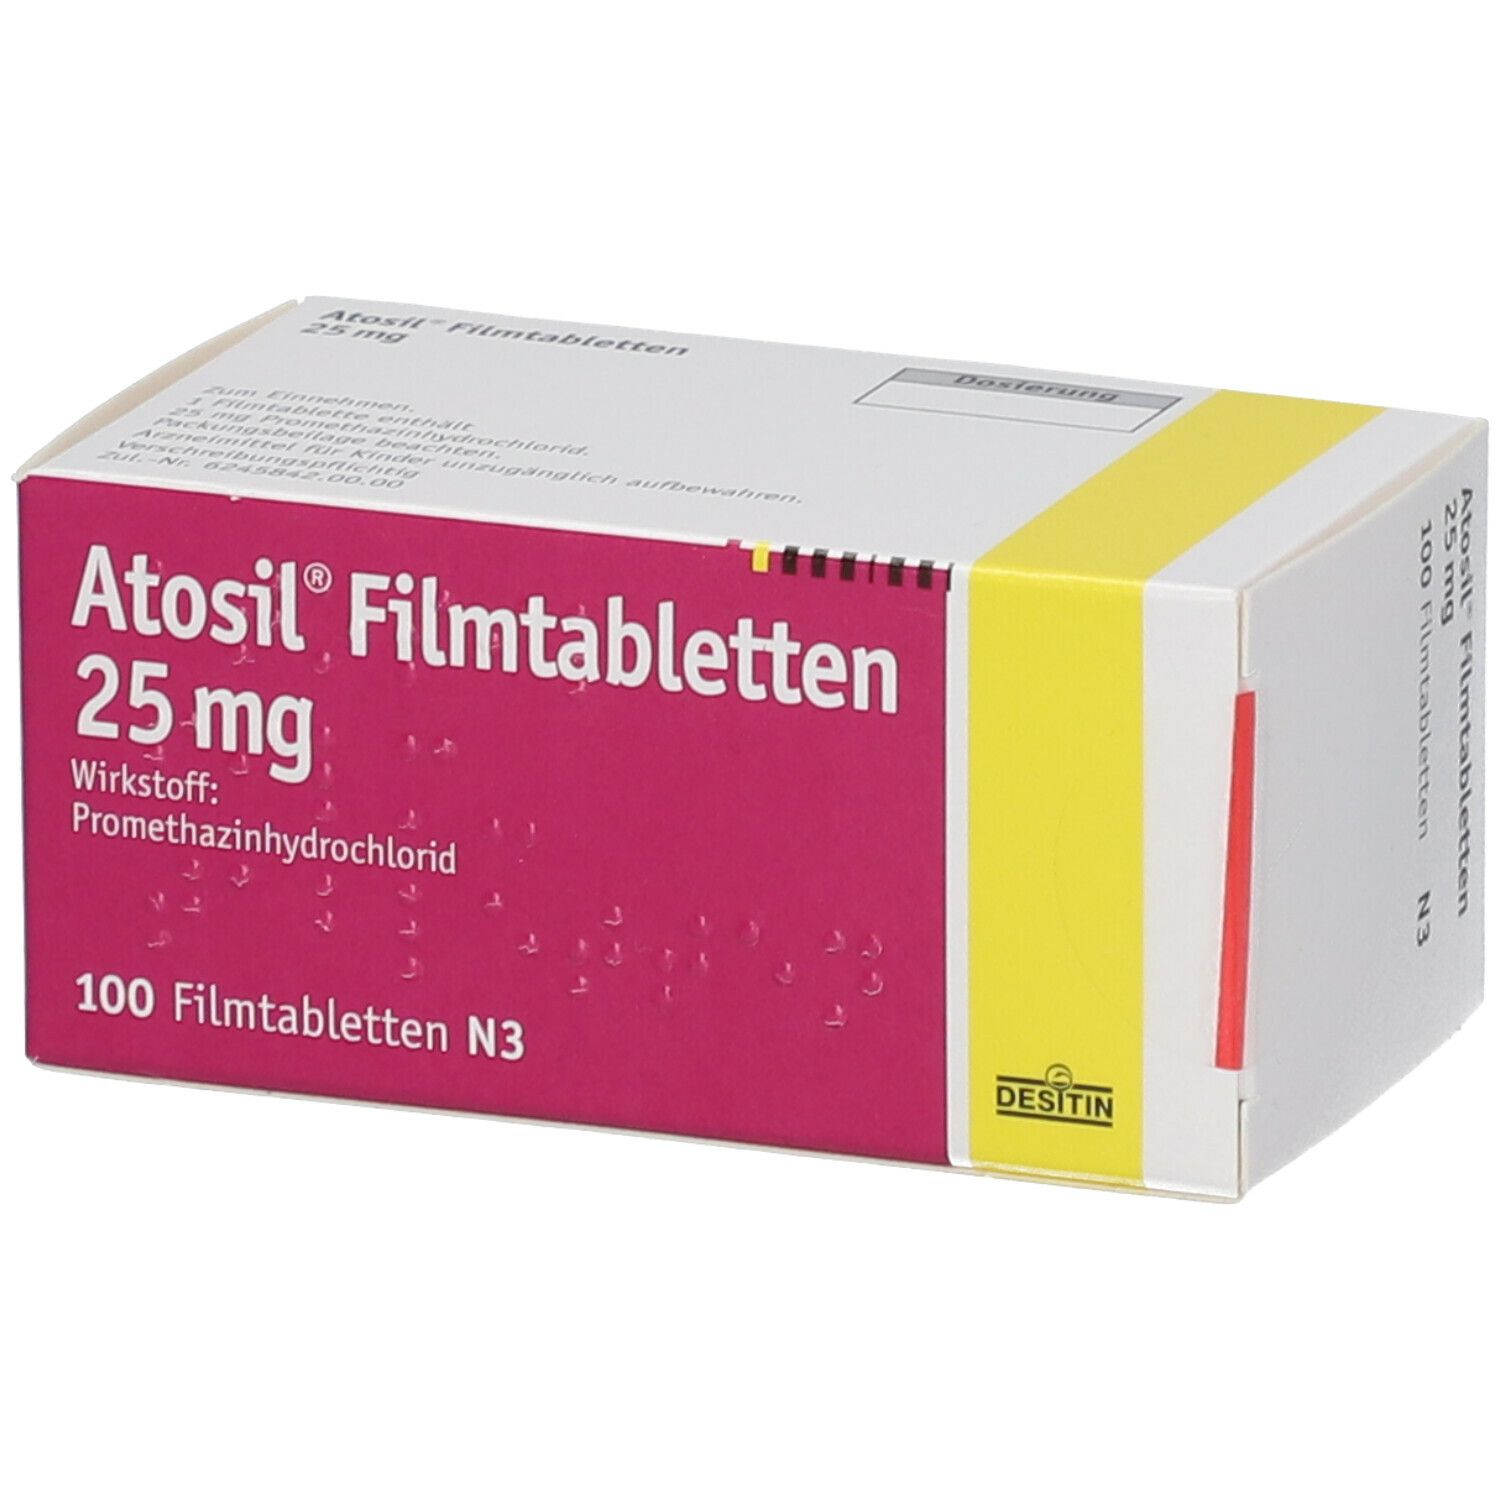 Atosil® 25 mg